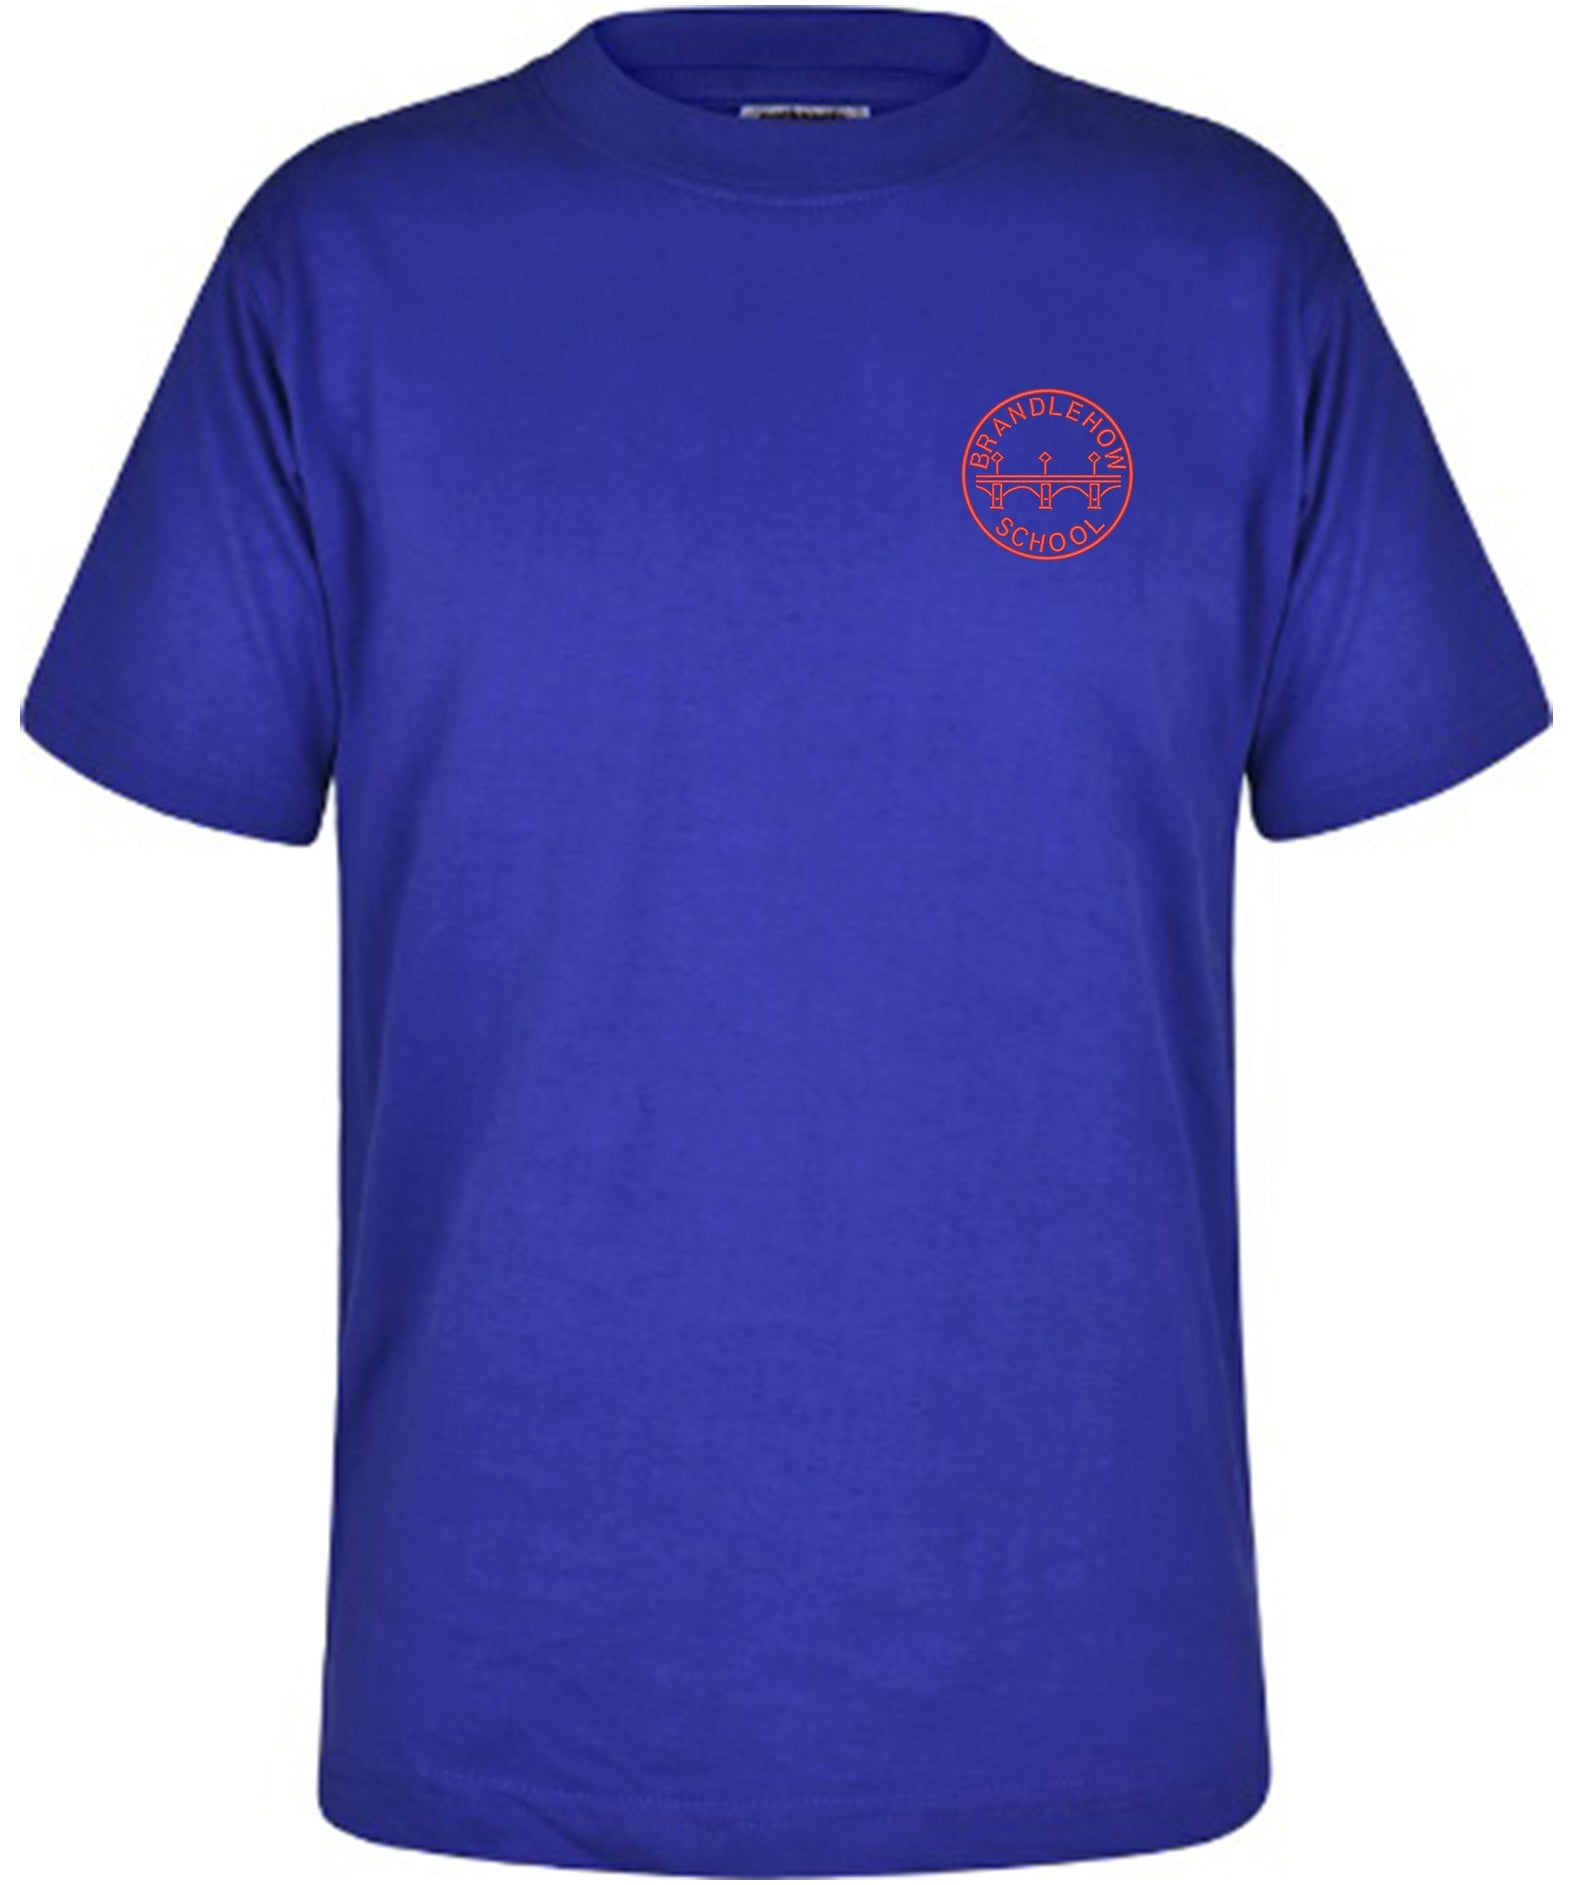 Brandlehow Primary School - Unisex Cotton T-Shirt - Royal Blue - School Uniform Shop